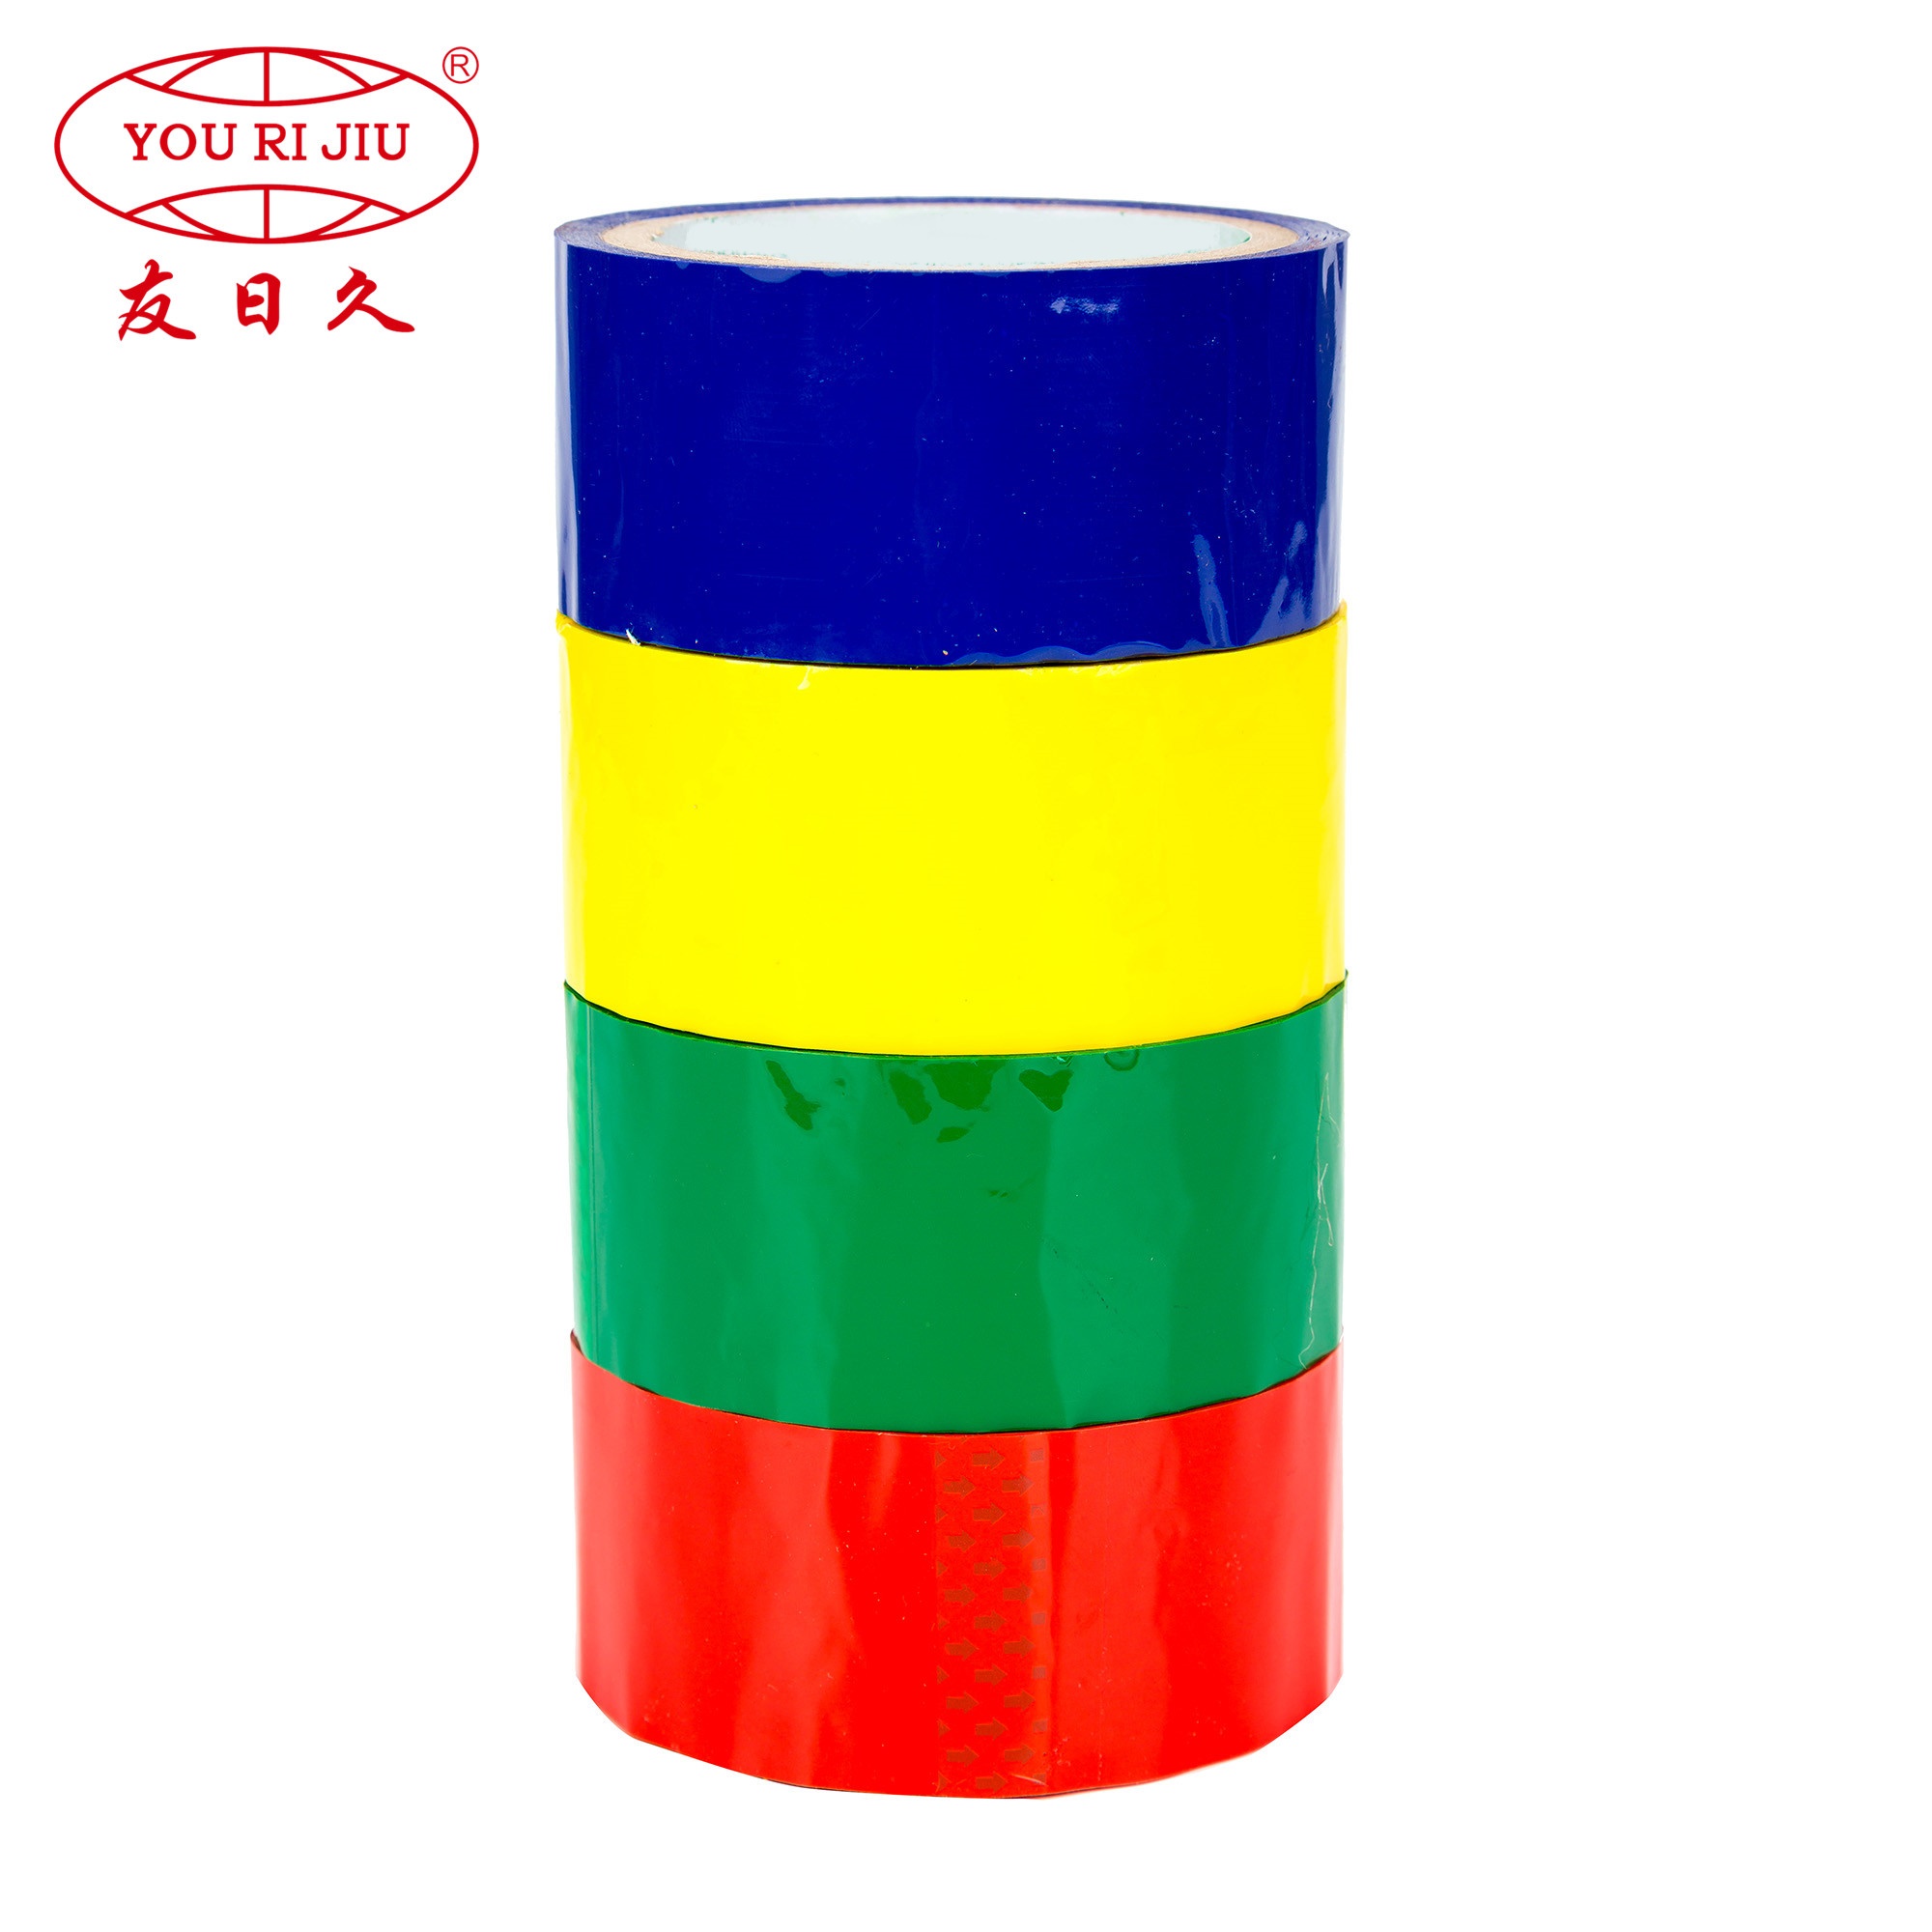 Yourijiu bopp packaging tape supplier for decoration bundling-1